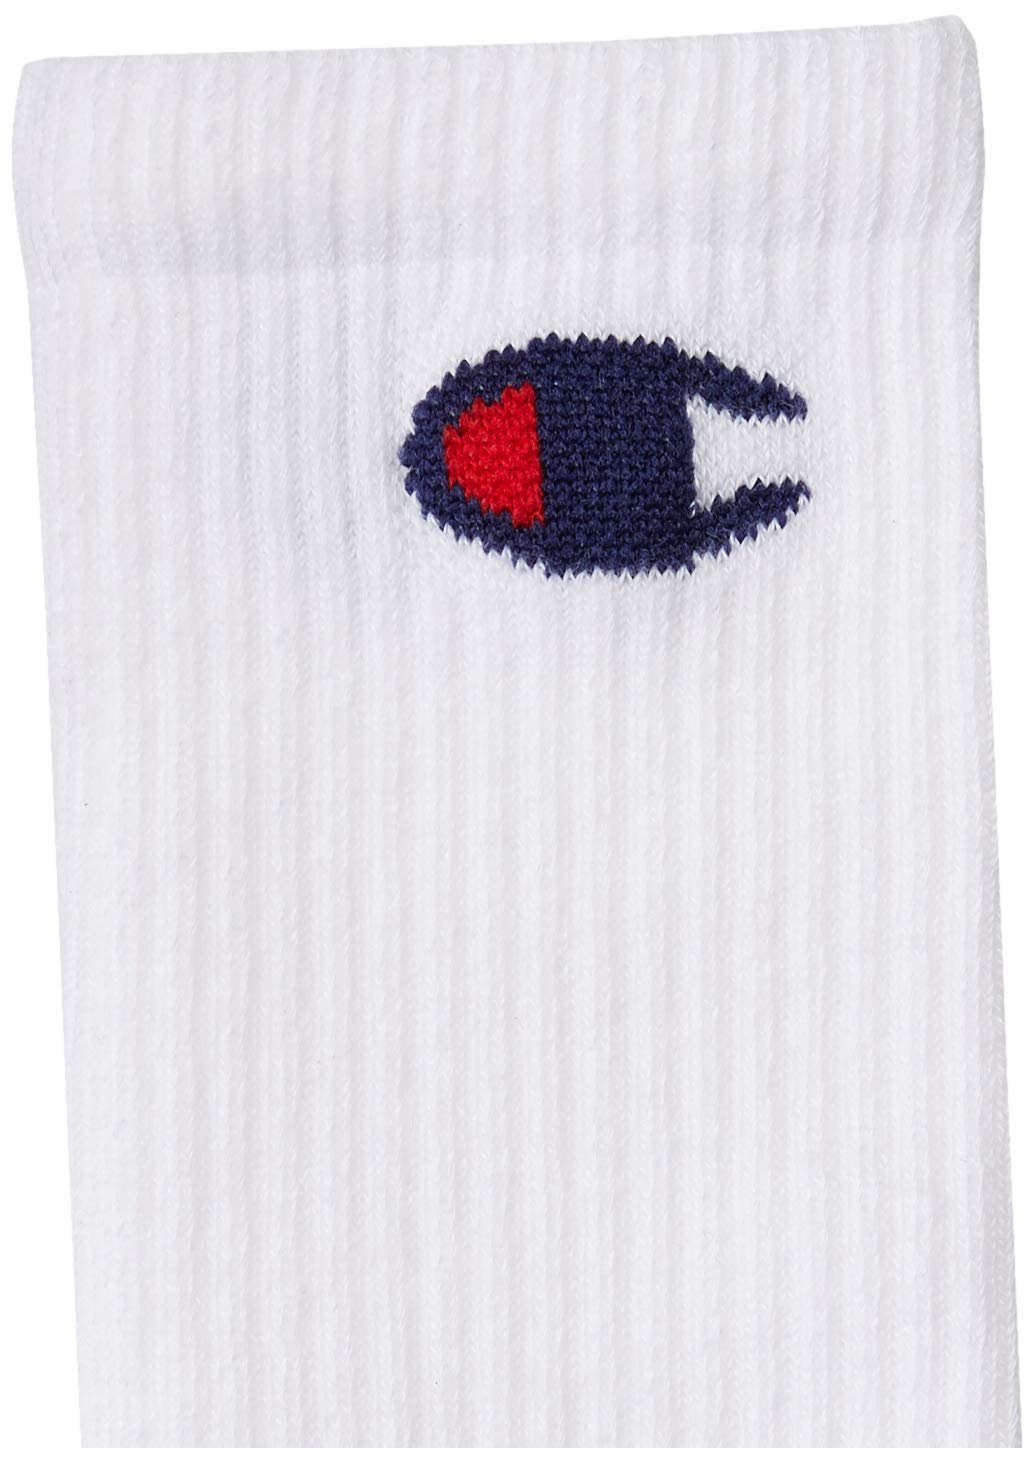 Champion Men's Double Dry Moisture Wicking Crew Socks; 6, 8, 12 Packs Available